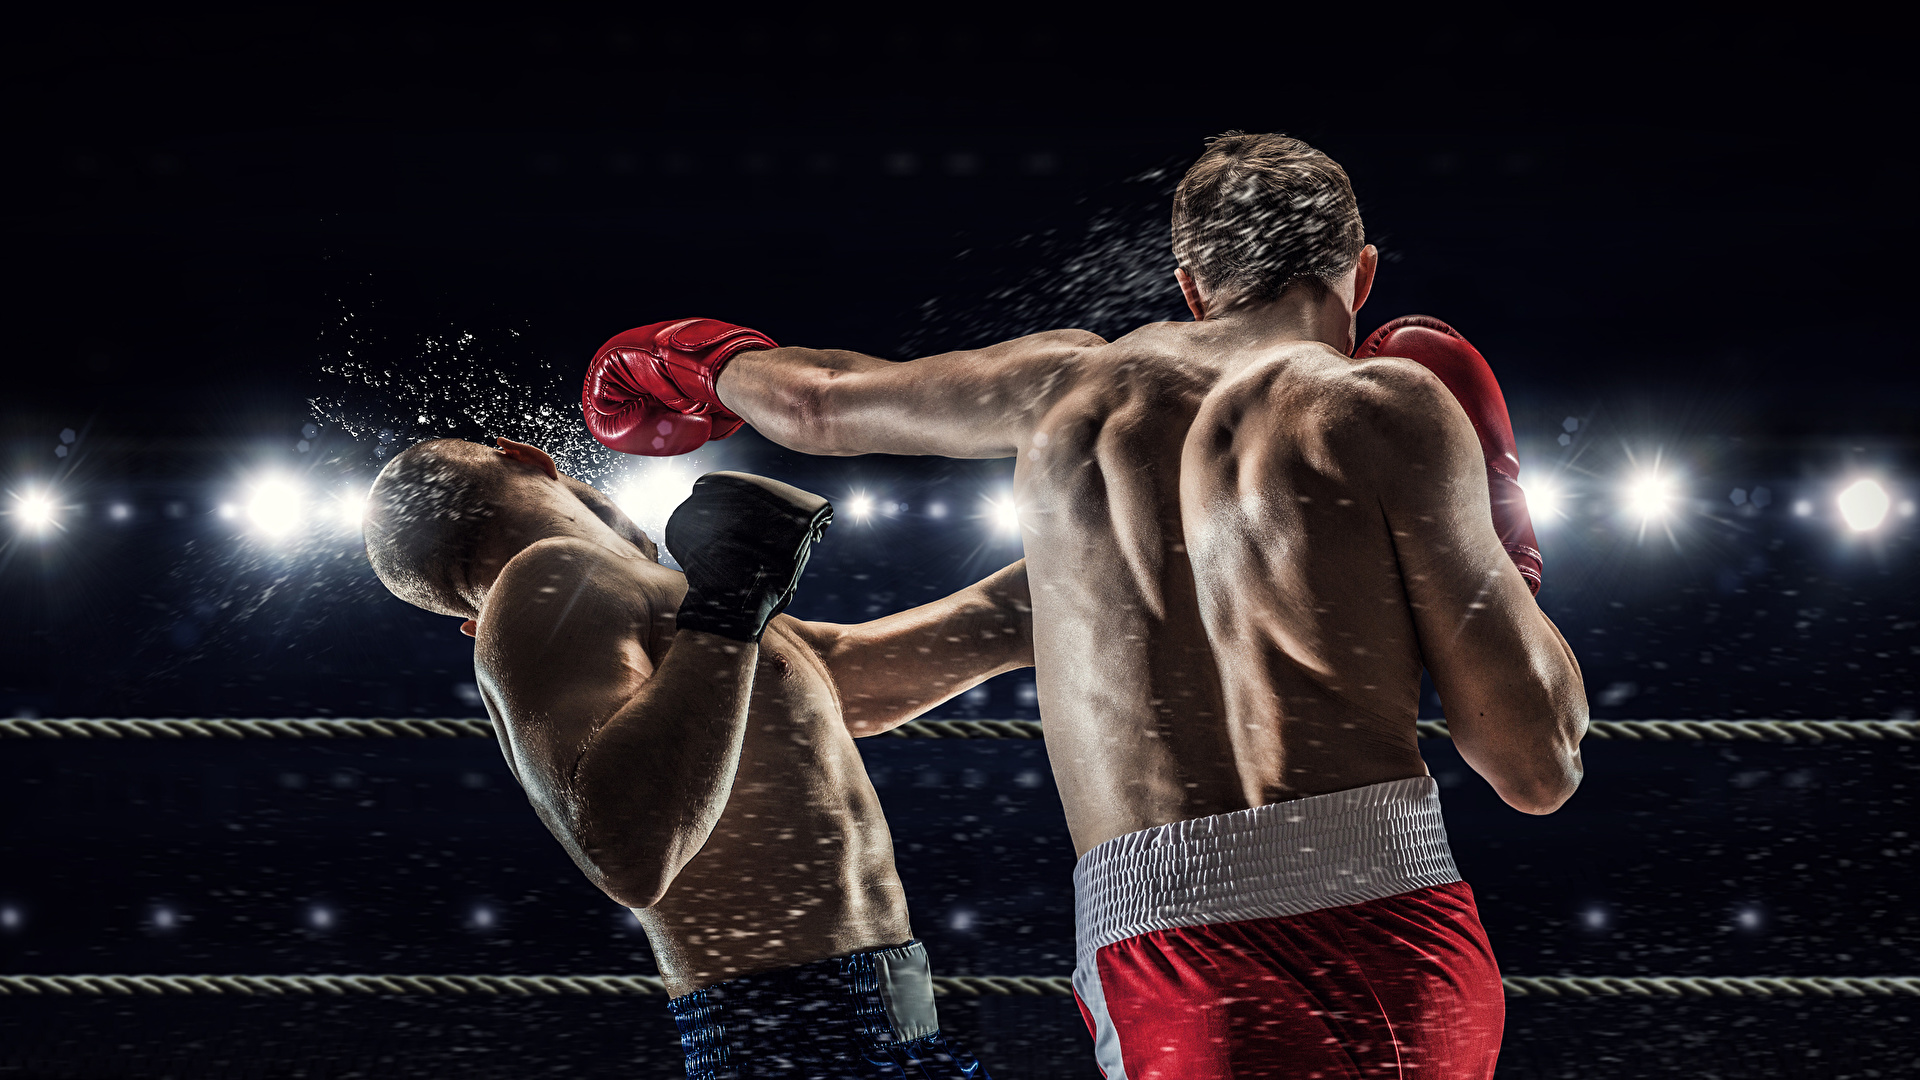 Desktop Wallpapers Men to beat Human back Two Sport Boxing 1920x1080